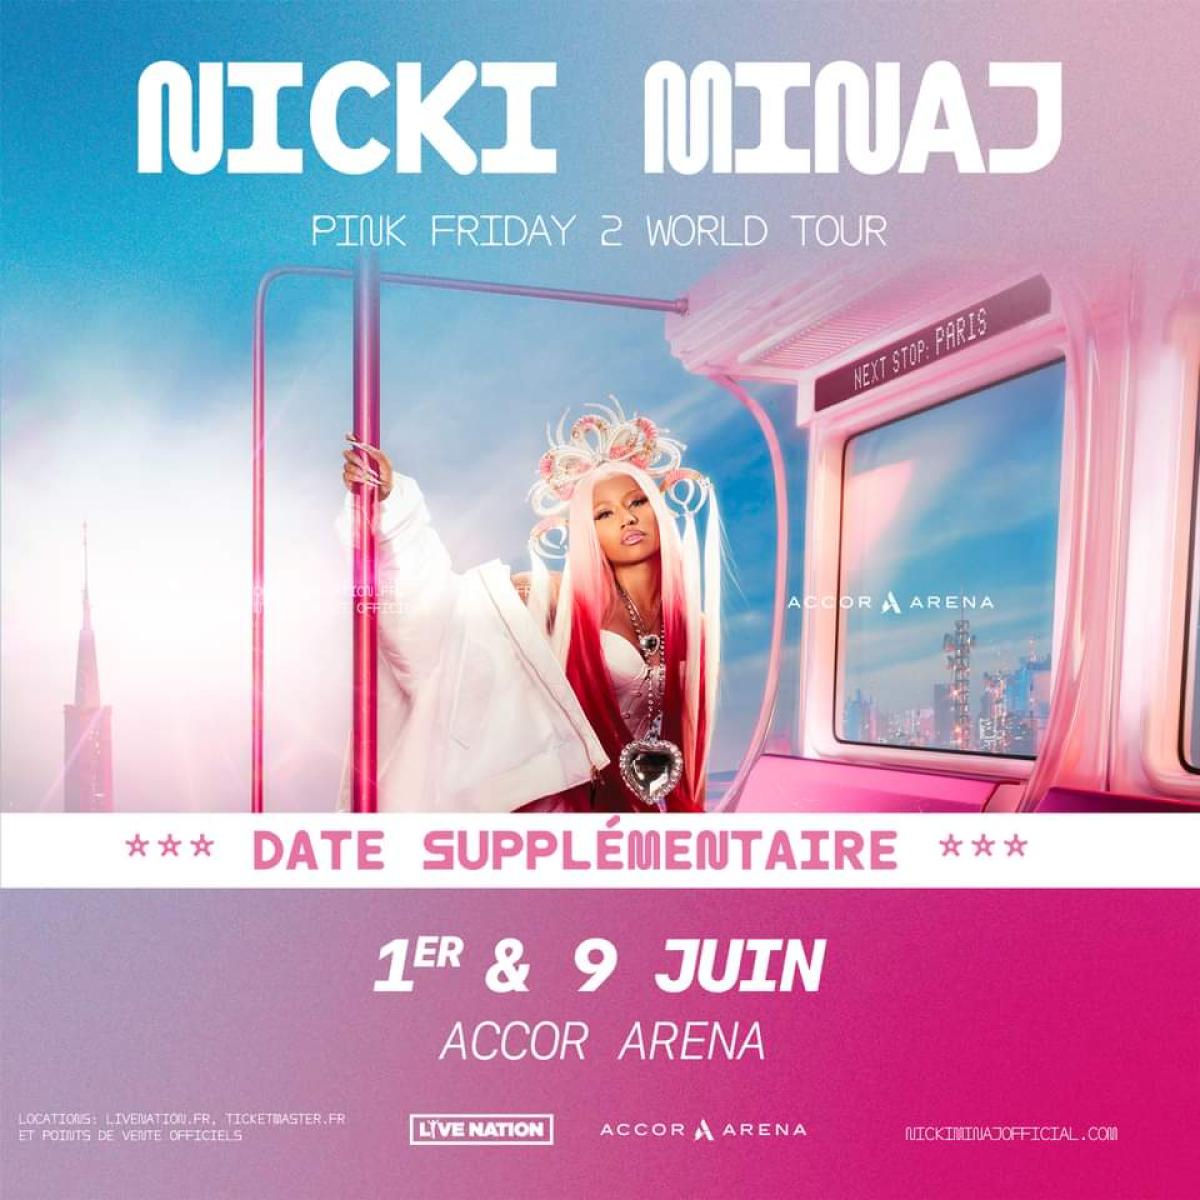 Nicki Minaj at Accor Arena Tickets